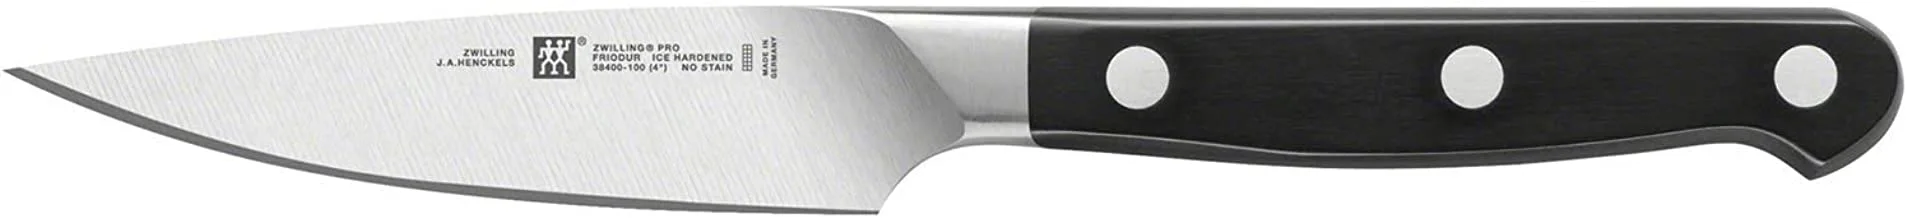 Zwilling Kitchen Pro Paring Knife, Black/Silver, 10 cm, ZG-38400-101